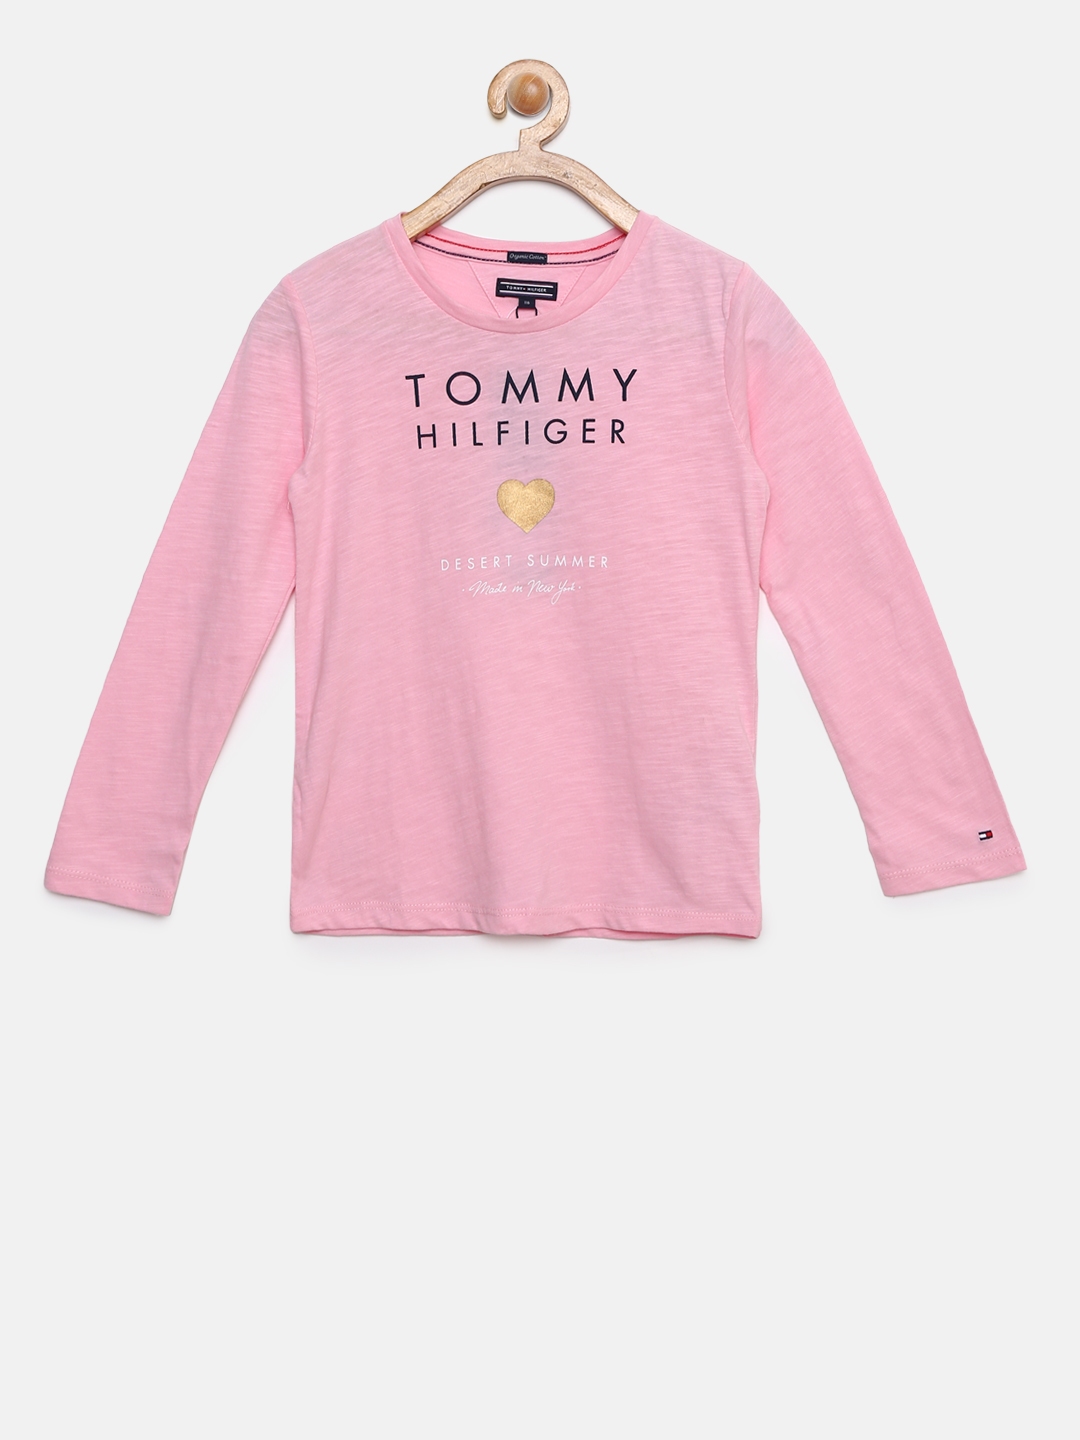 tommy hilfiger girls shirts